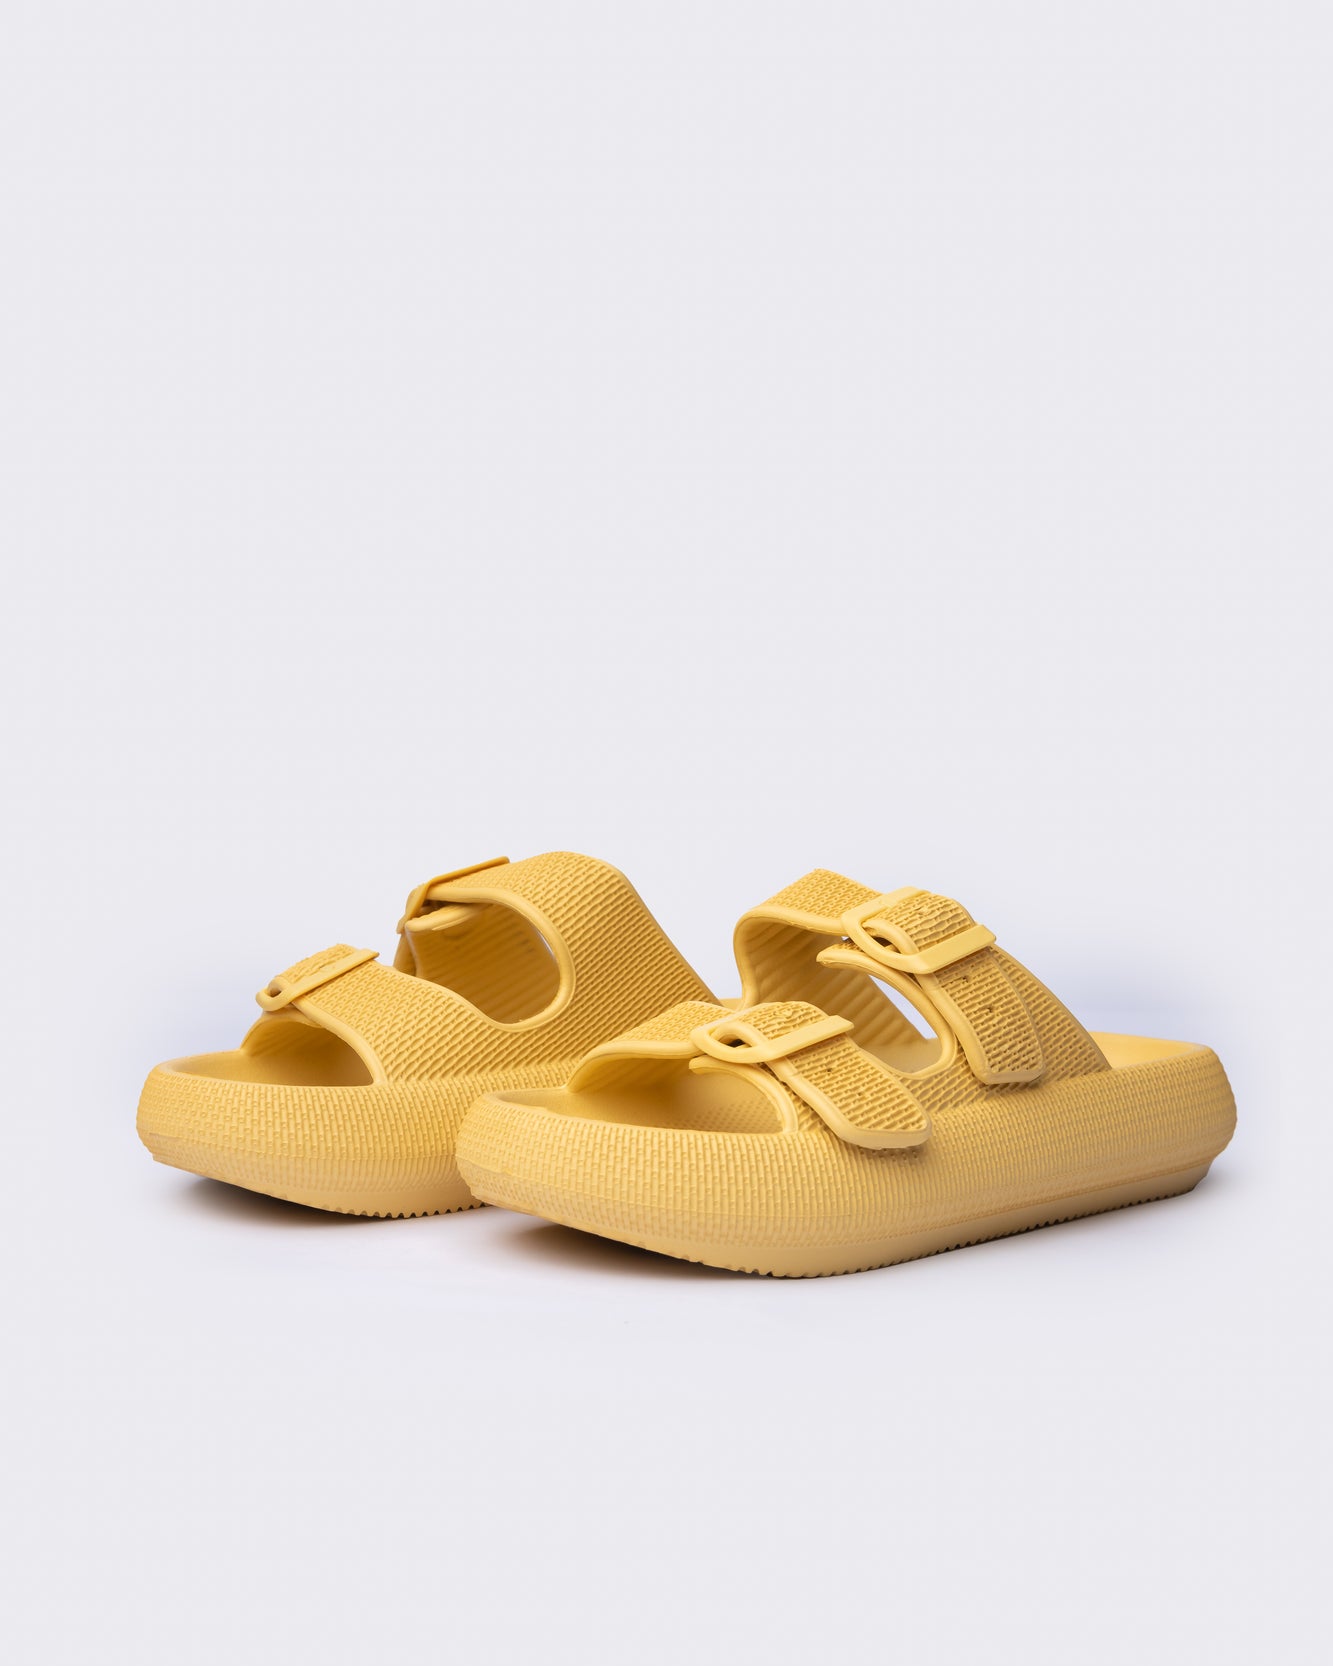 Dad sandals amarilla